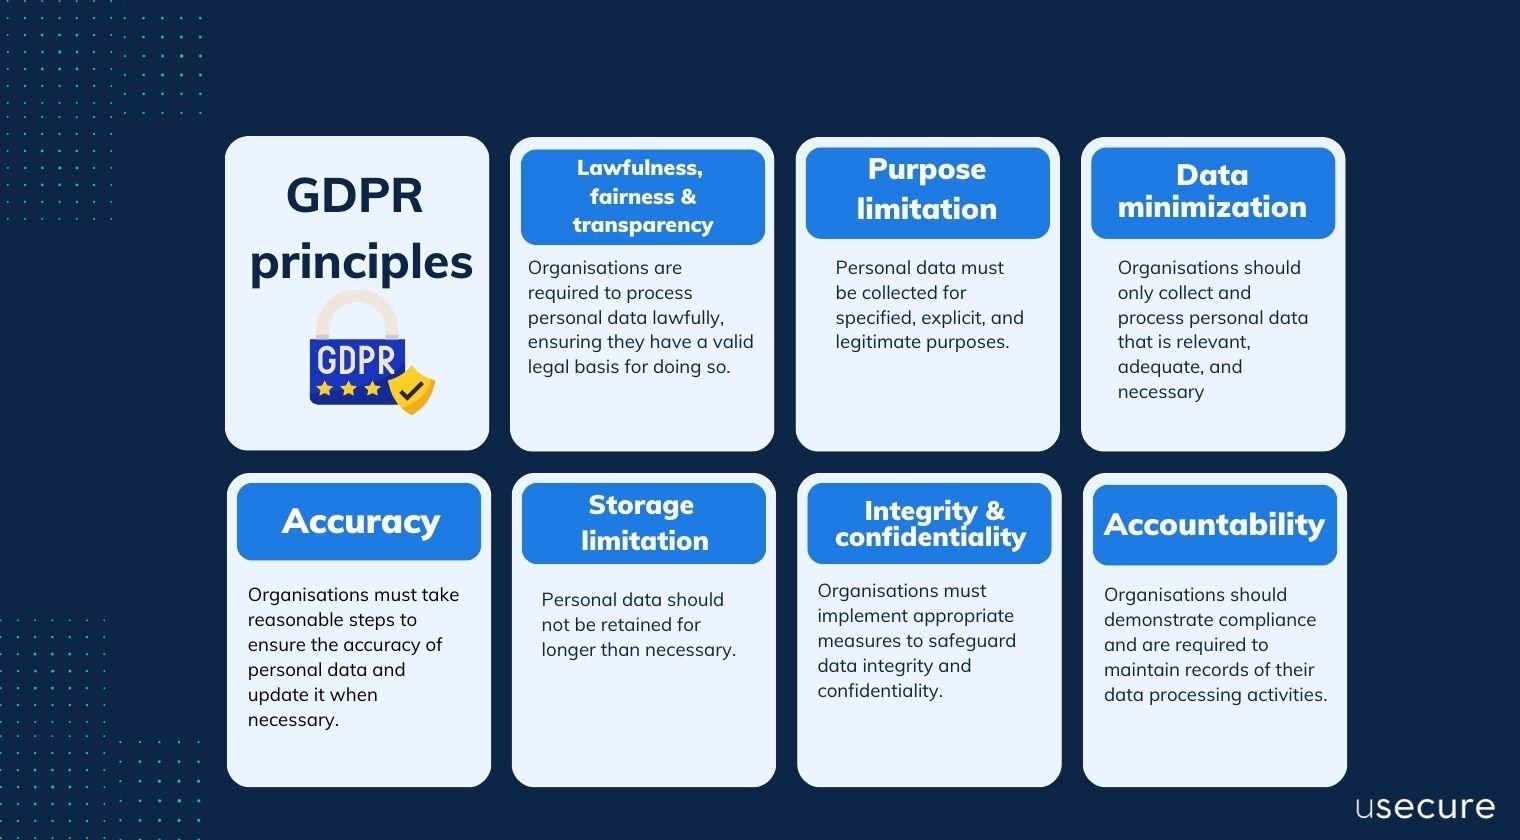 GDPR principles